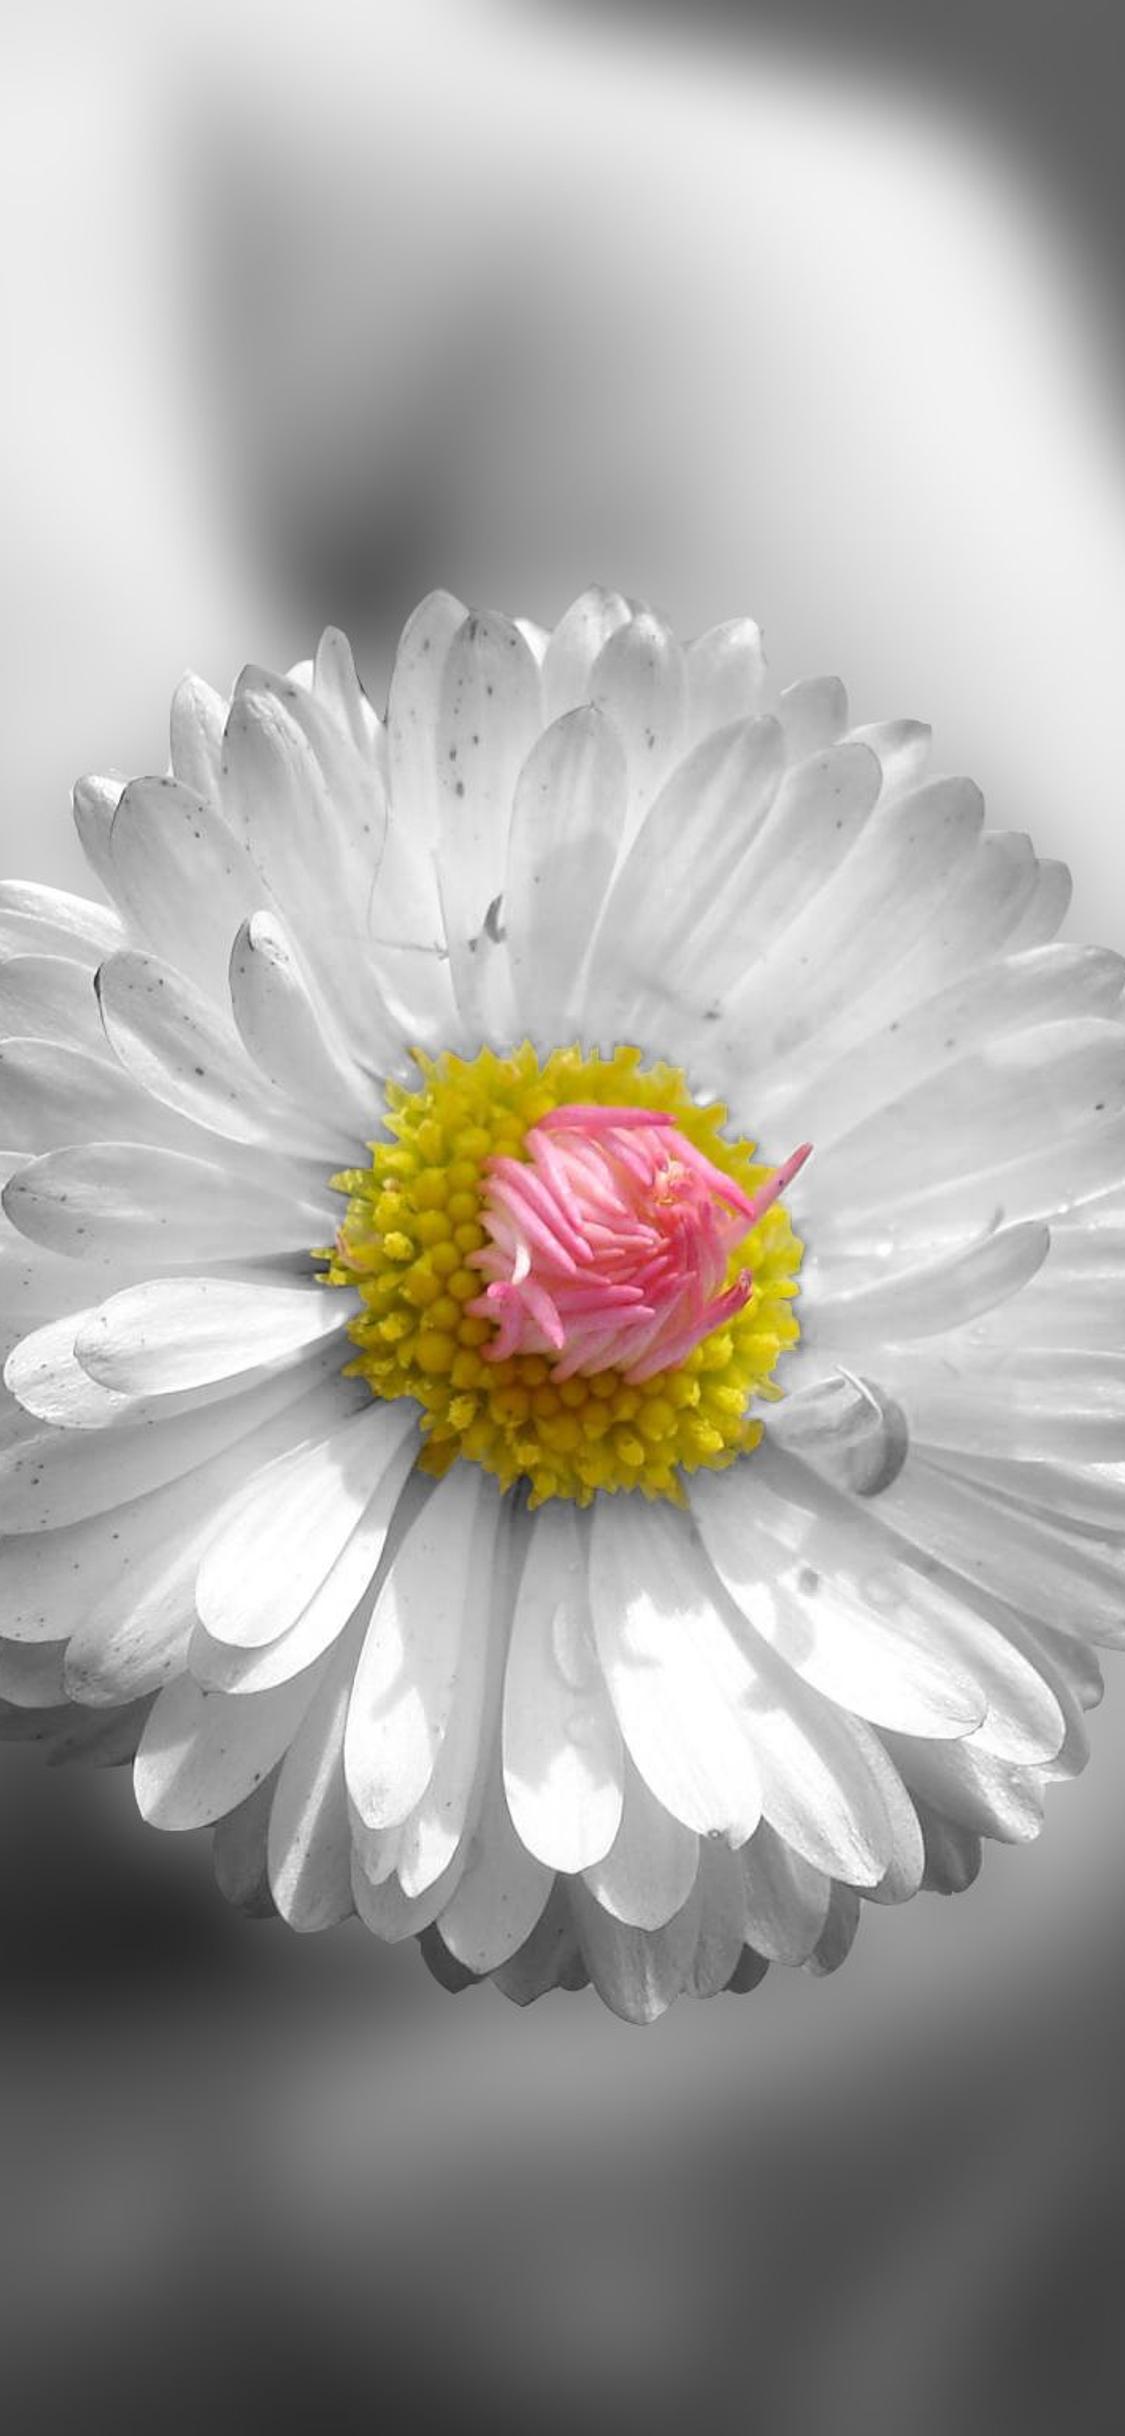 A delicate white flower - HD wallpaper